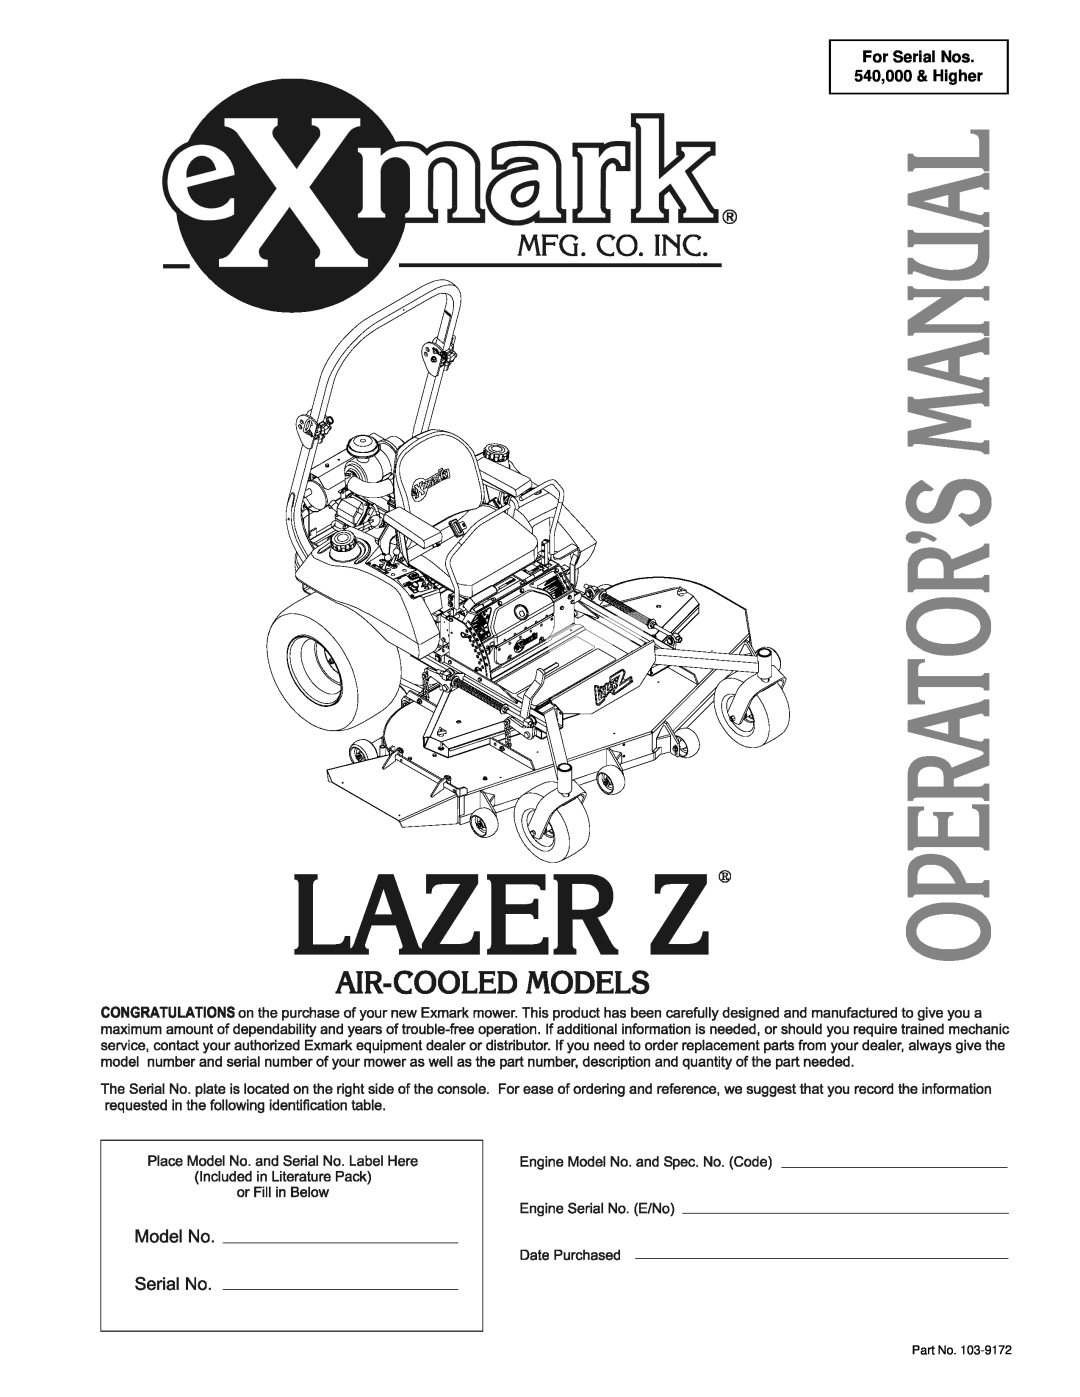 Exmark LAZER Z HP manual Ultra Vac, Lazer Z Hp Models, For Serial Nos 850,000 & Higher, Part No. 4500-599Rev. A 